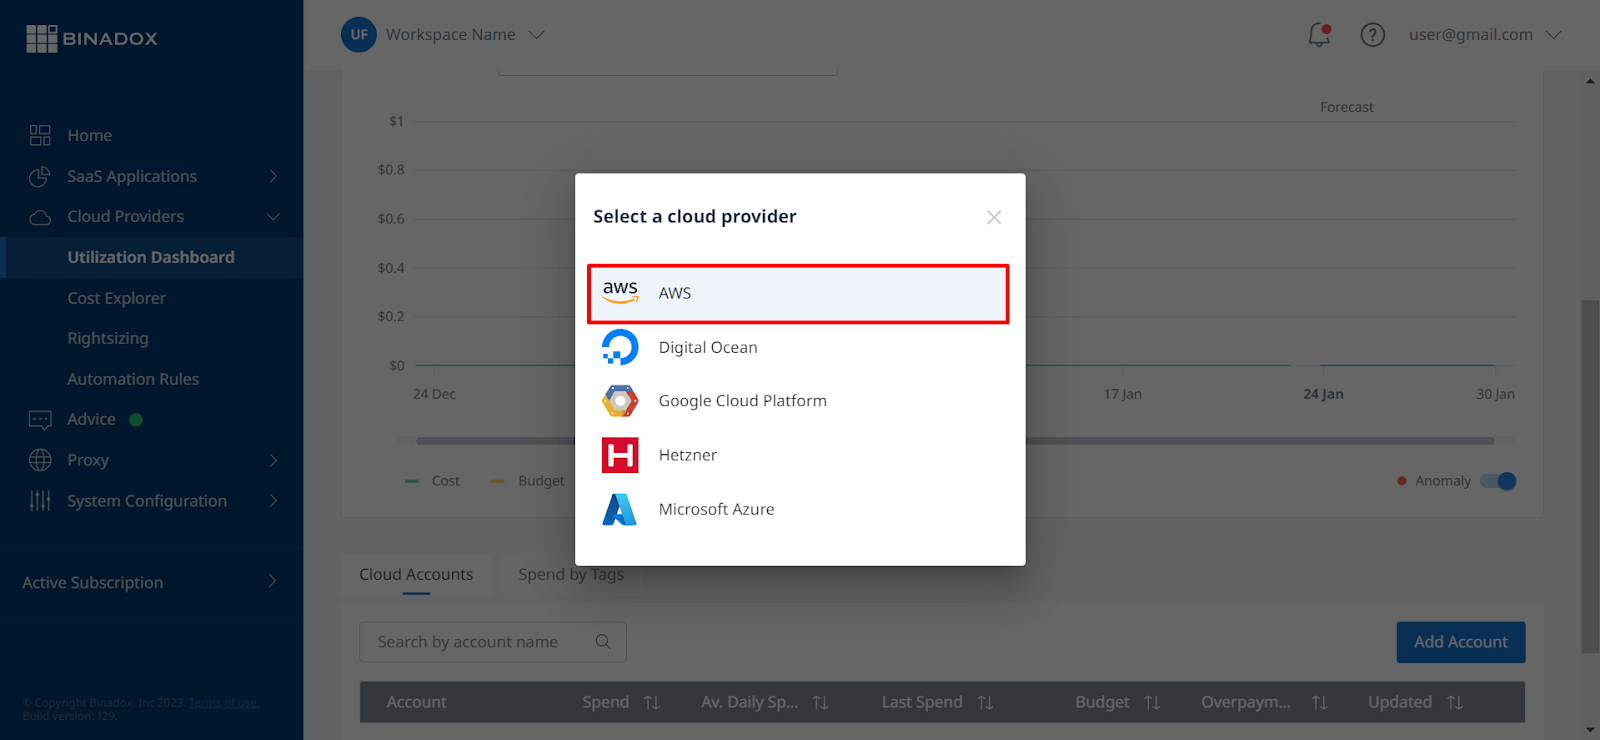 Select a cloud provider